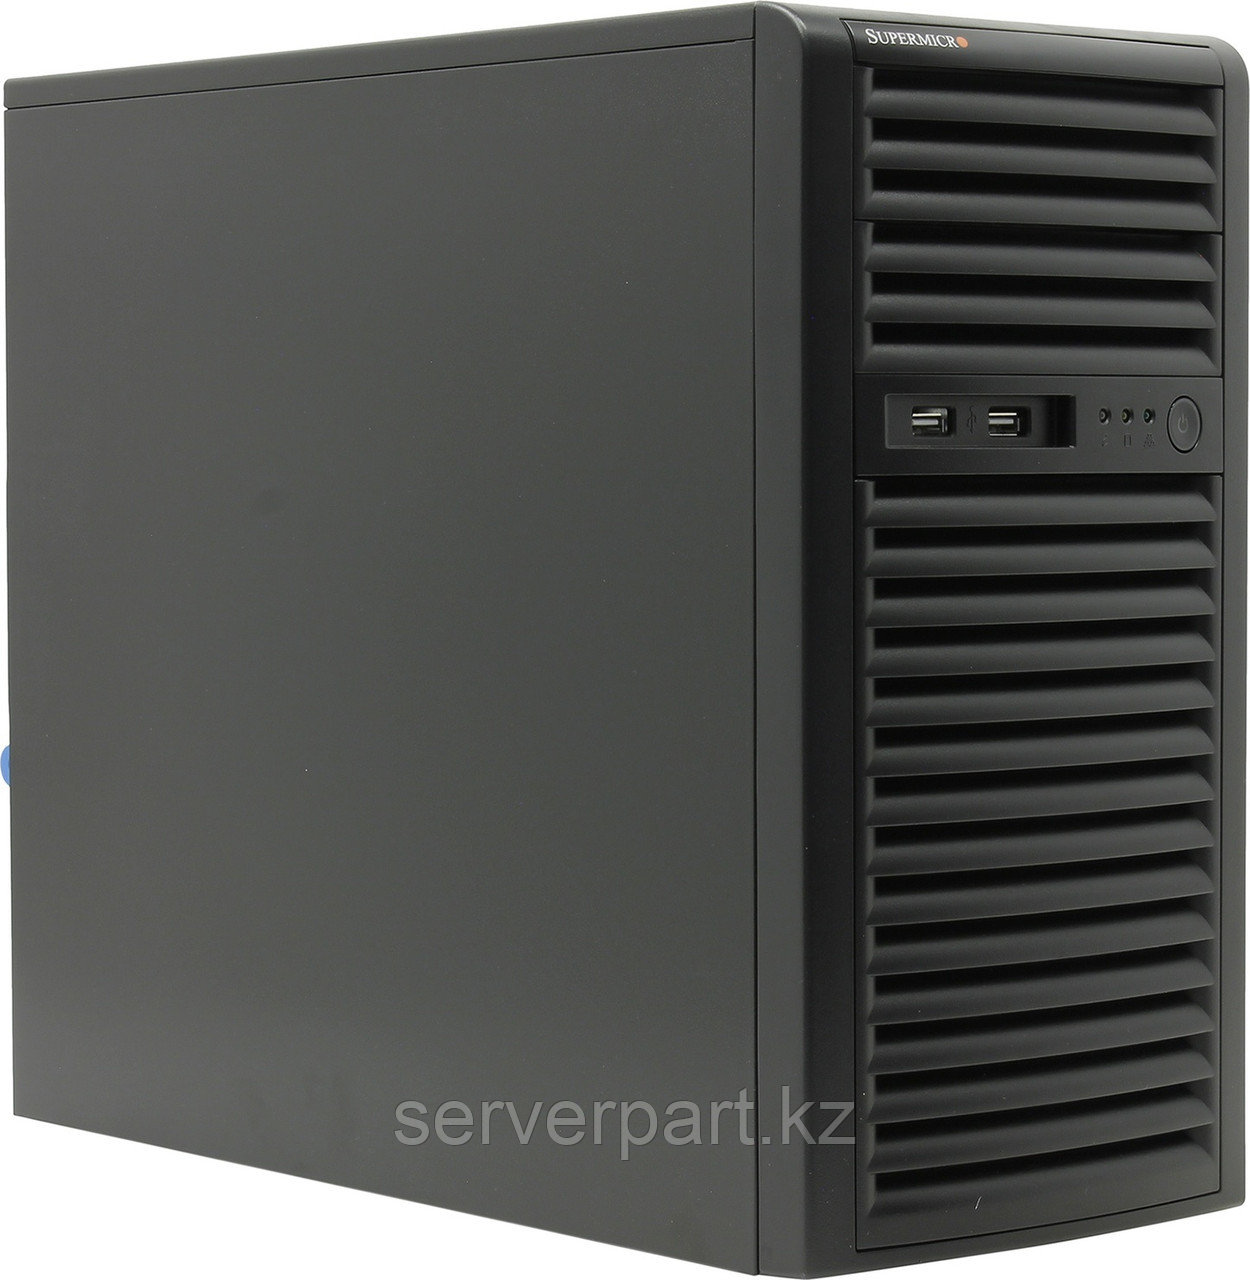 Сервер Supermicro SYS-5039D Tower/4-core intel xeon E3-1220v6 3GHz/16GB EUDIMM/1x240GB SSD RI Hyb